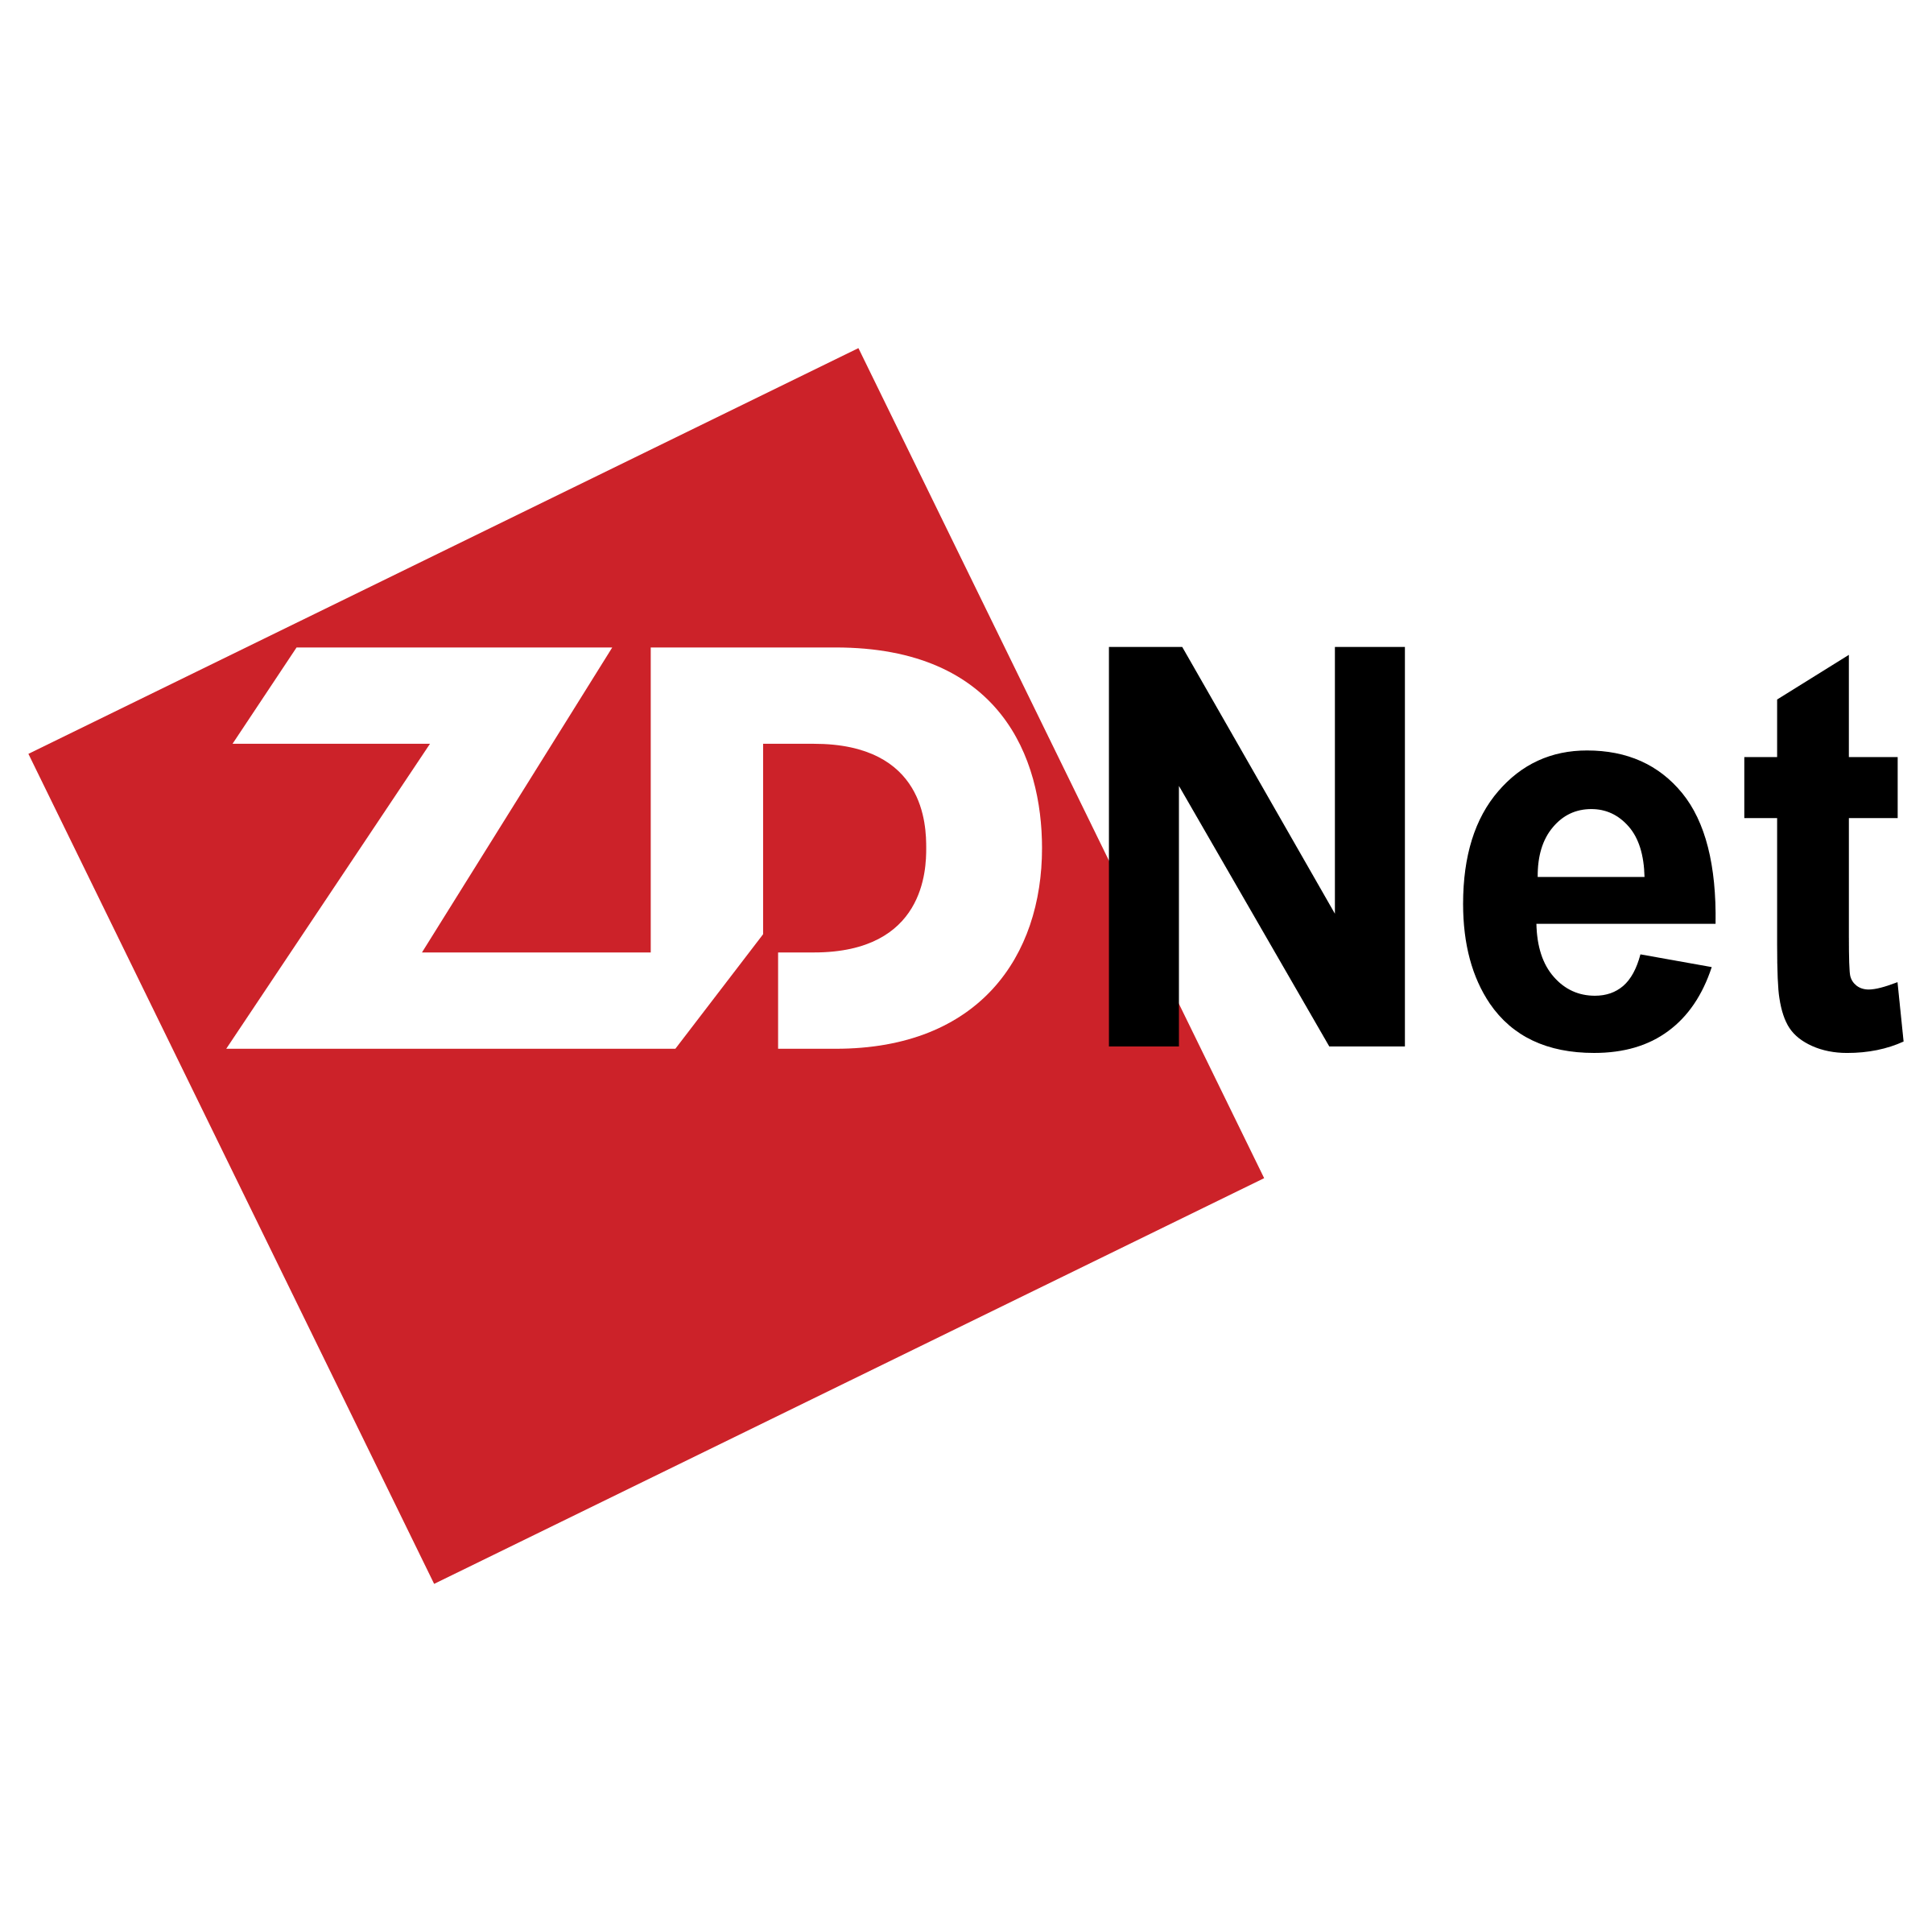 ZDNet Logo - Zdnet Logo